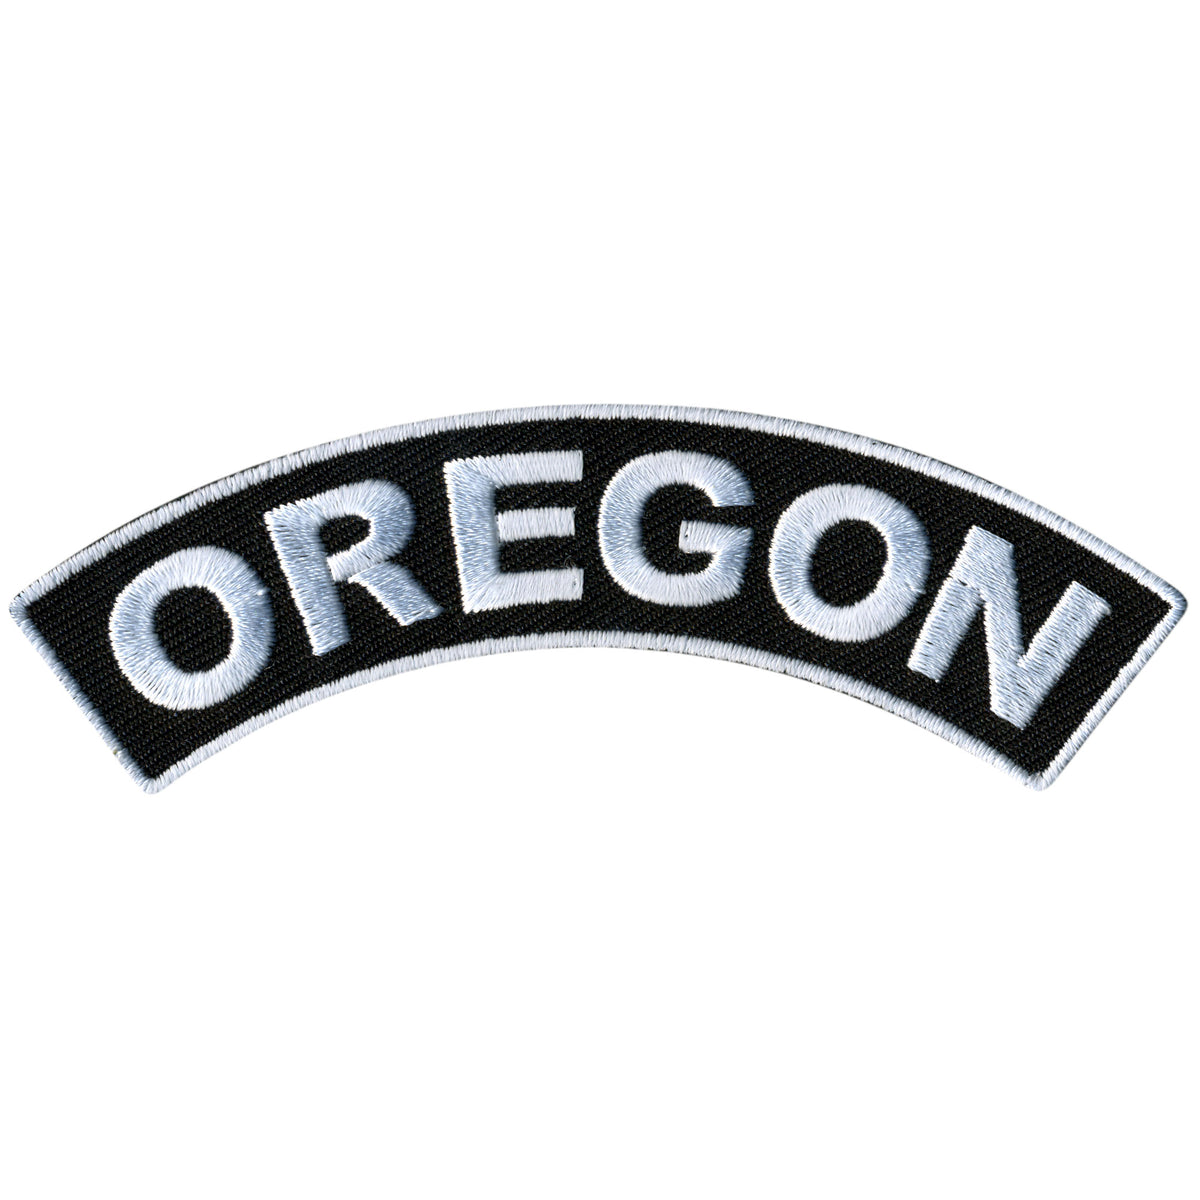 Hot Leathers Oregon 4” X 1” Top Rocker Patch